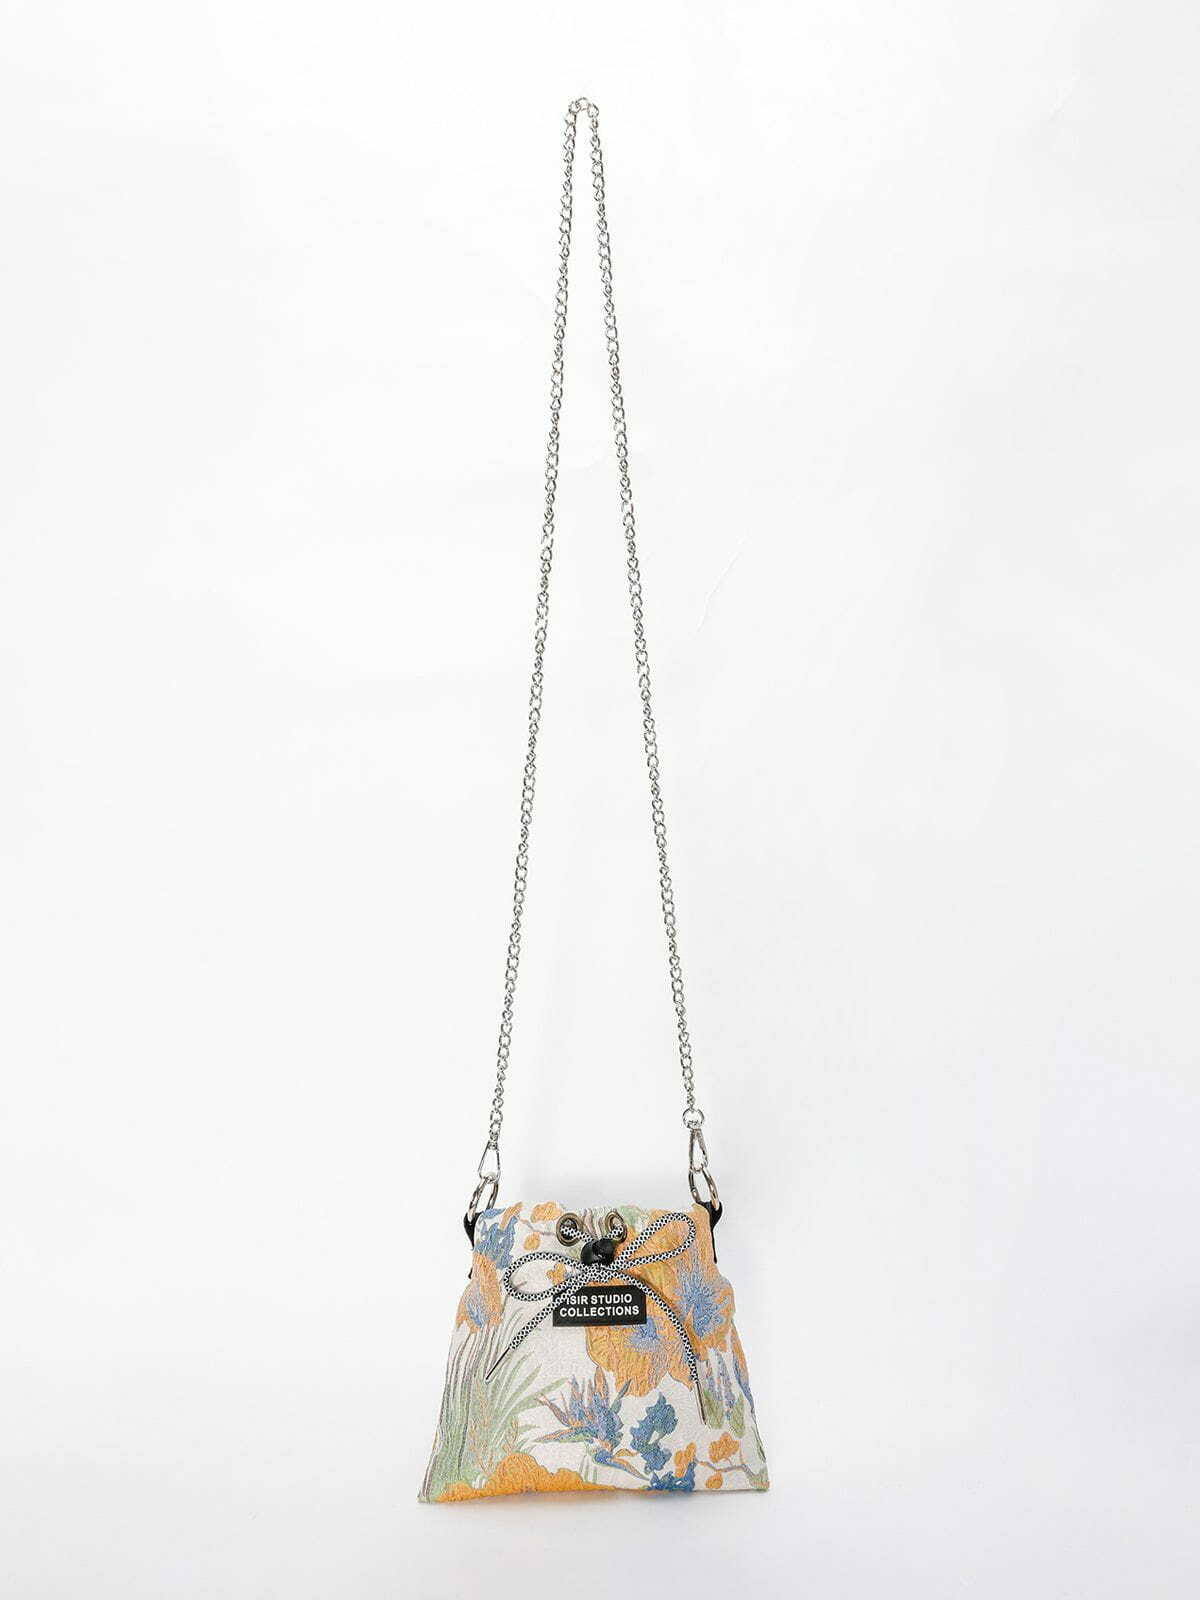 sleek desert sisal plant relief chain bag urban fashion accessory 5488